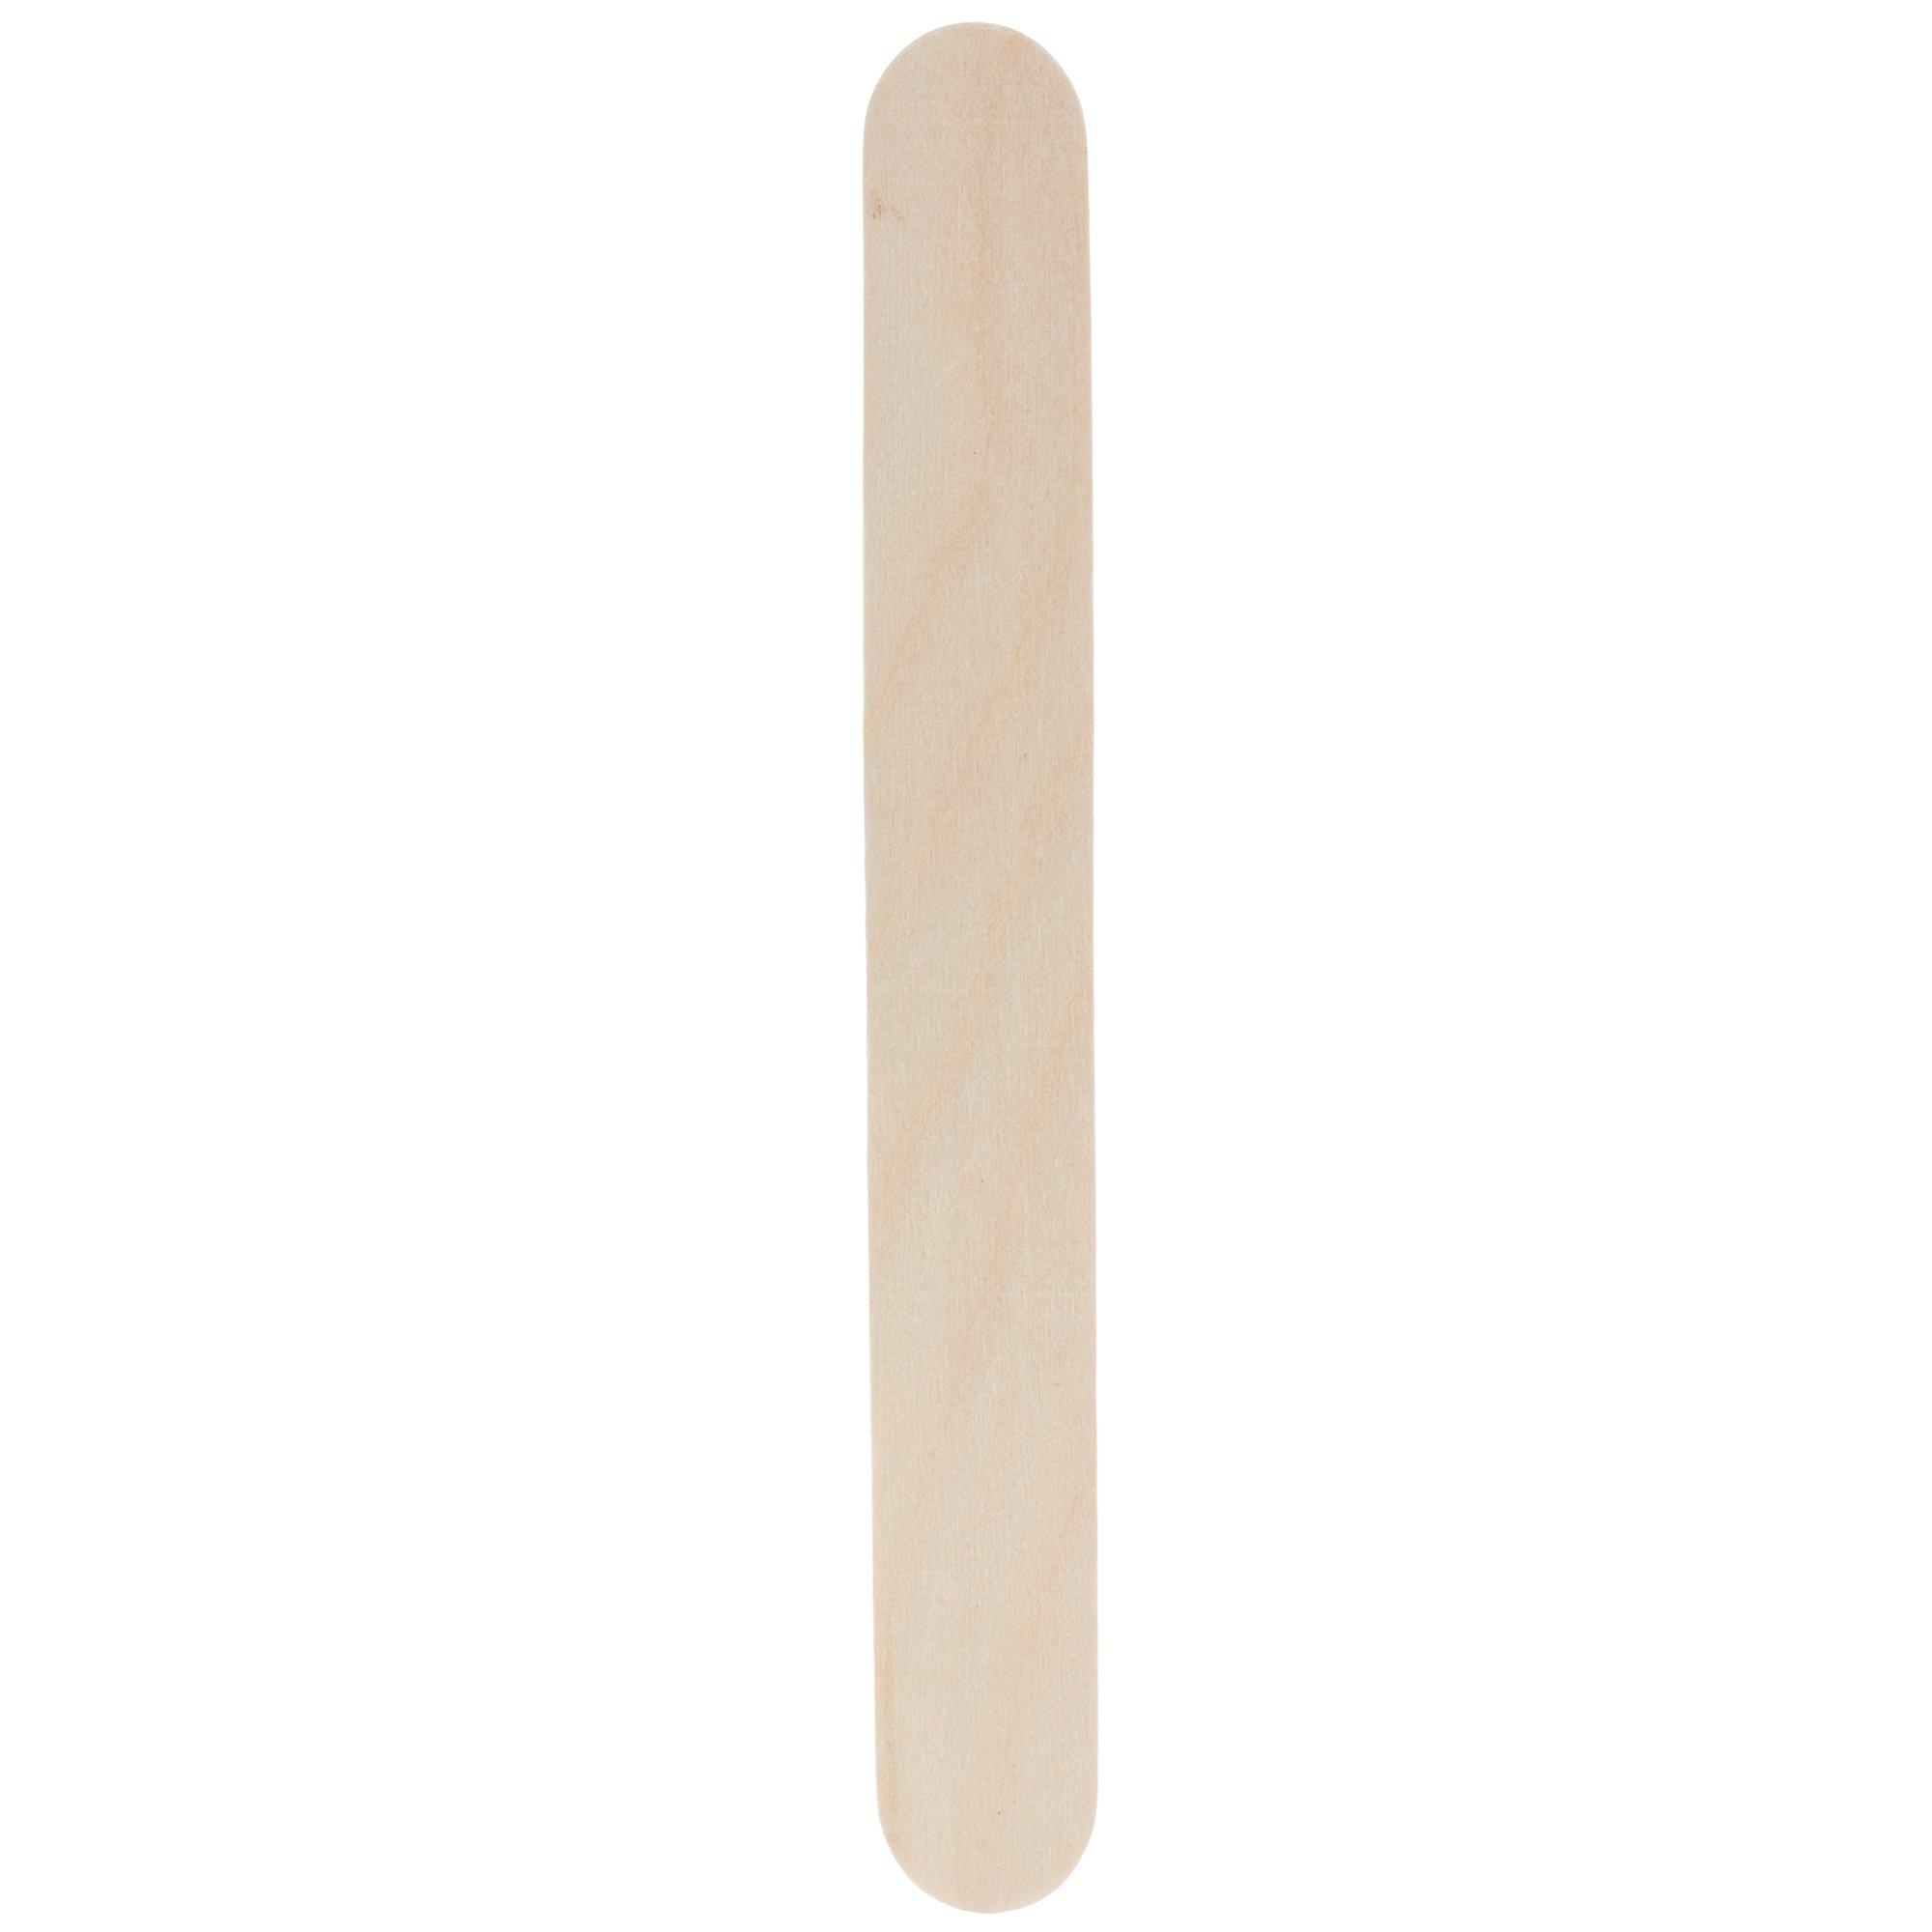 Wood Craft Sticks - Jumbo